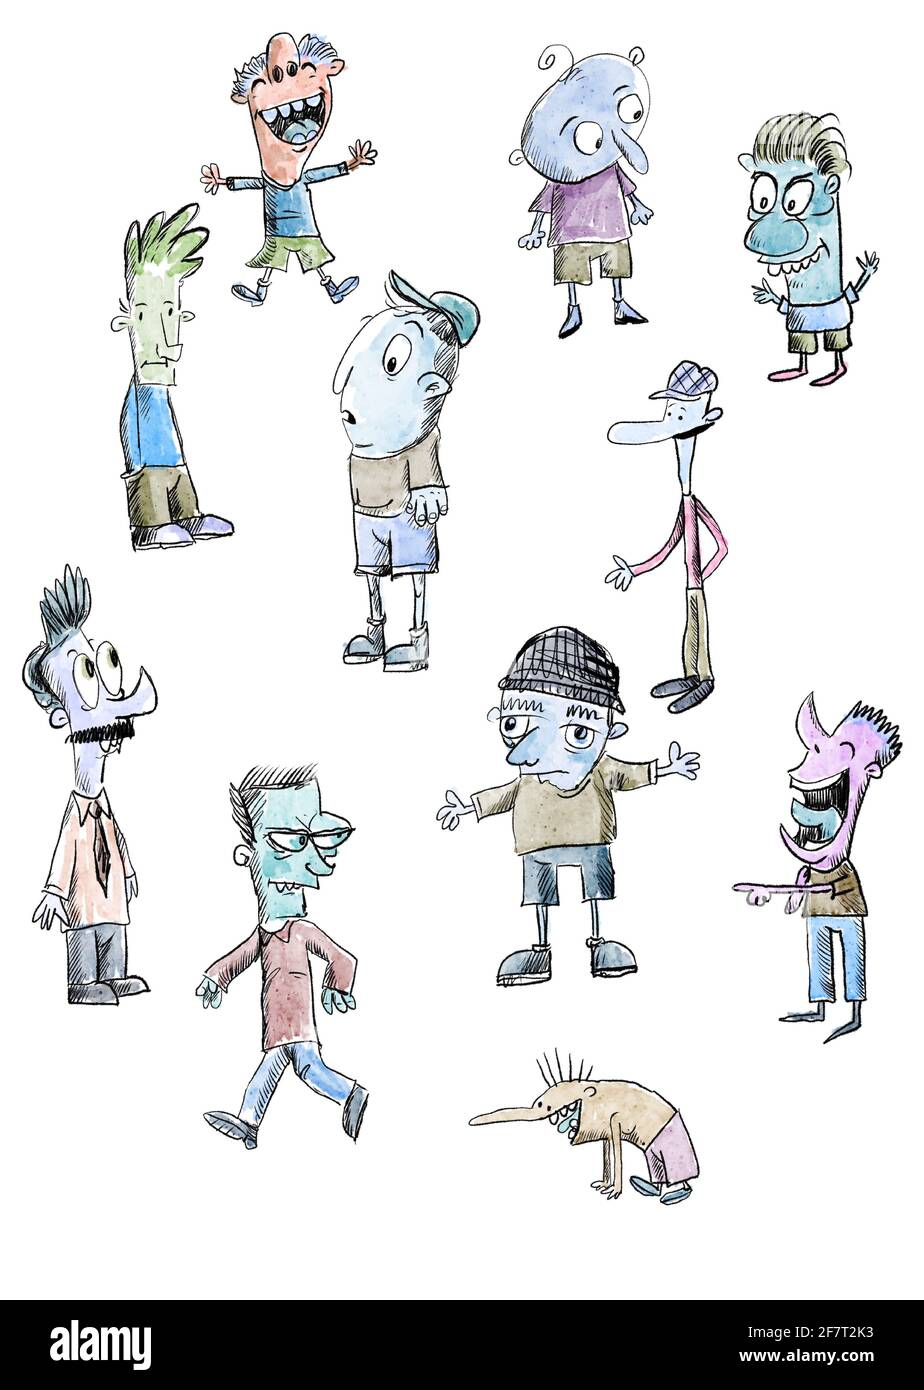 assorted cartoon characters illustration art Stock Photo - Alamy